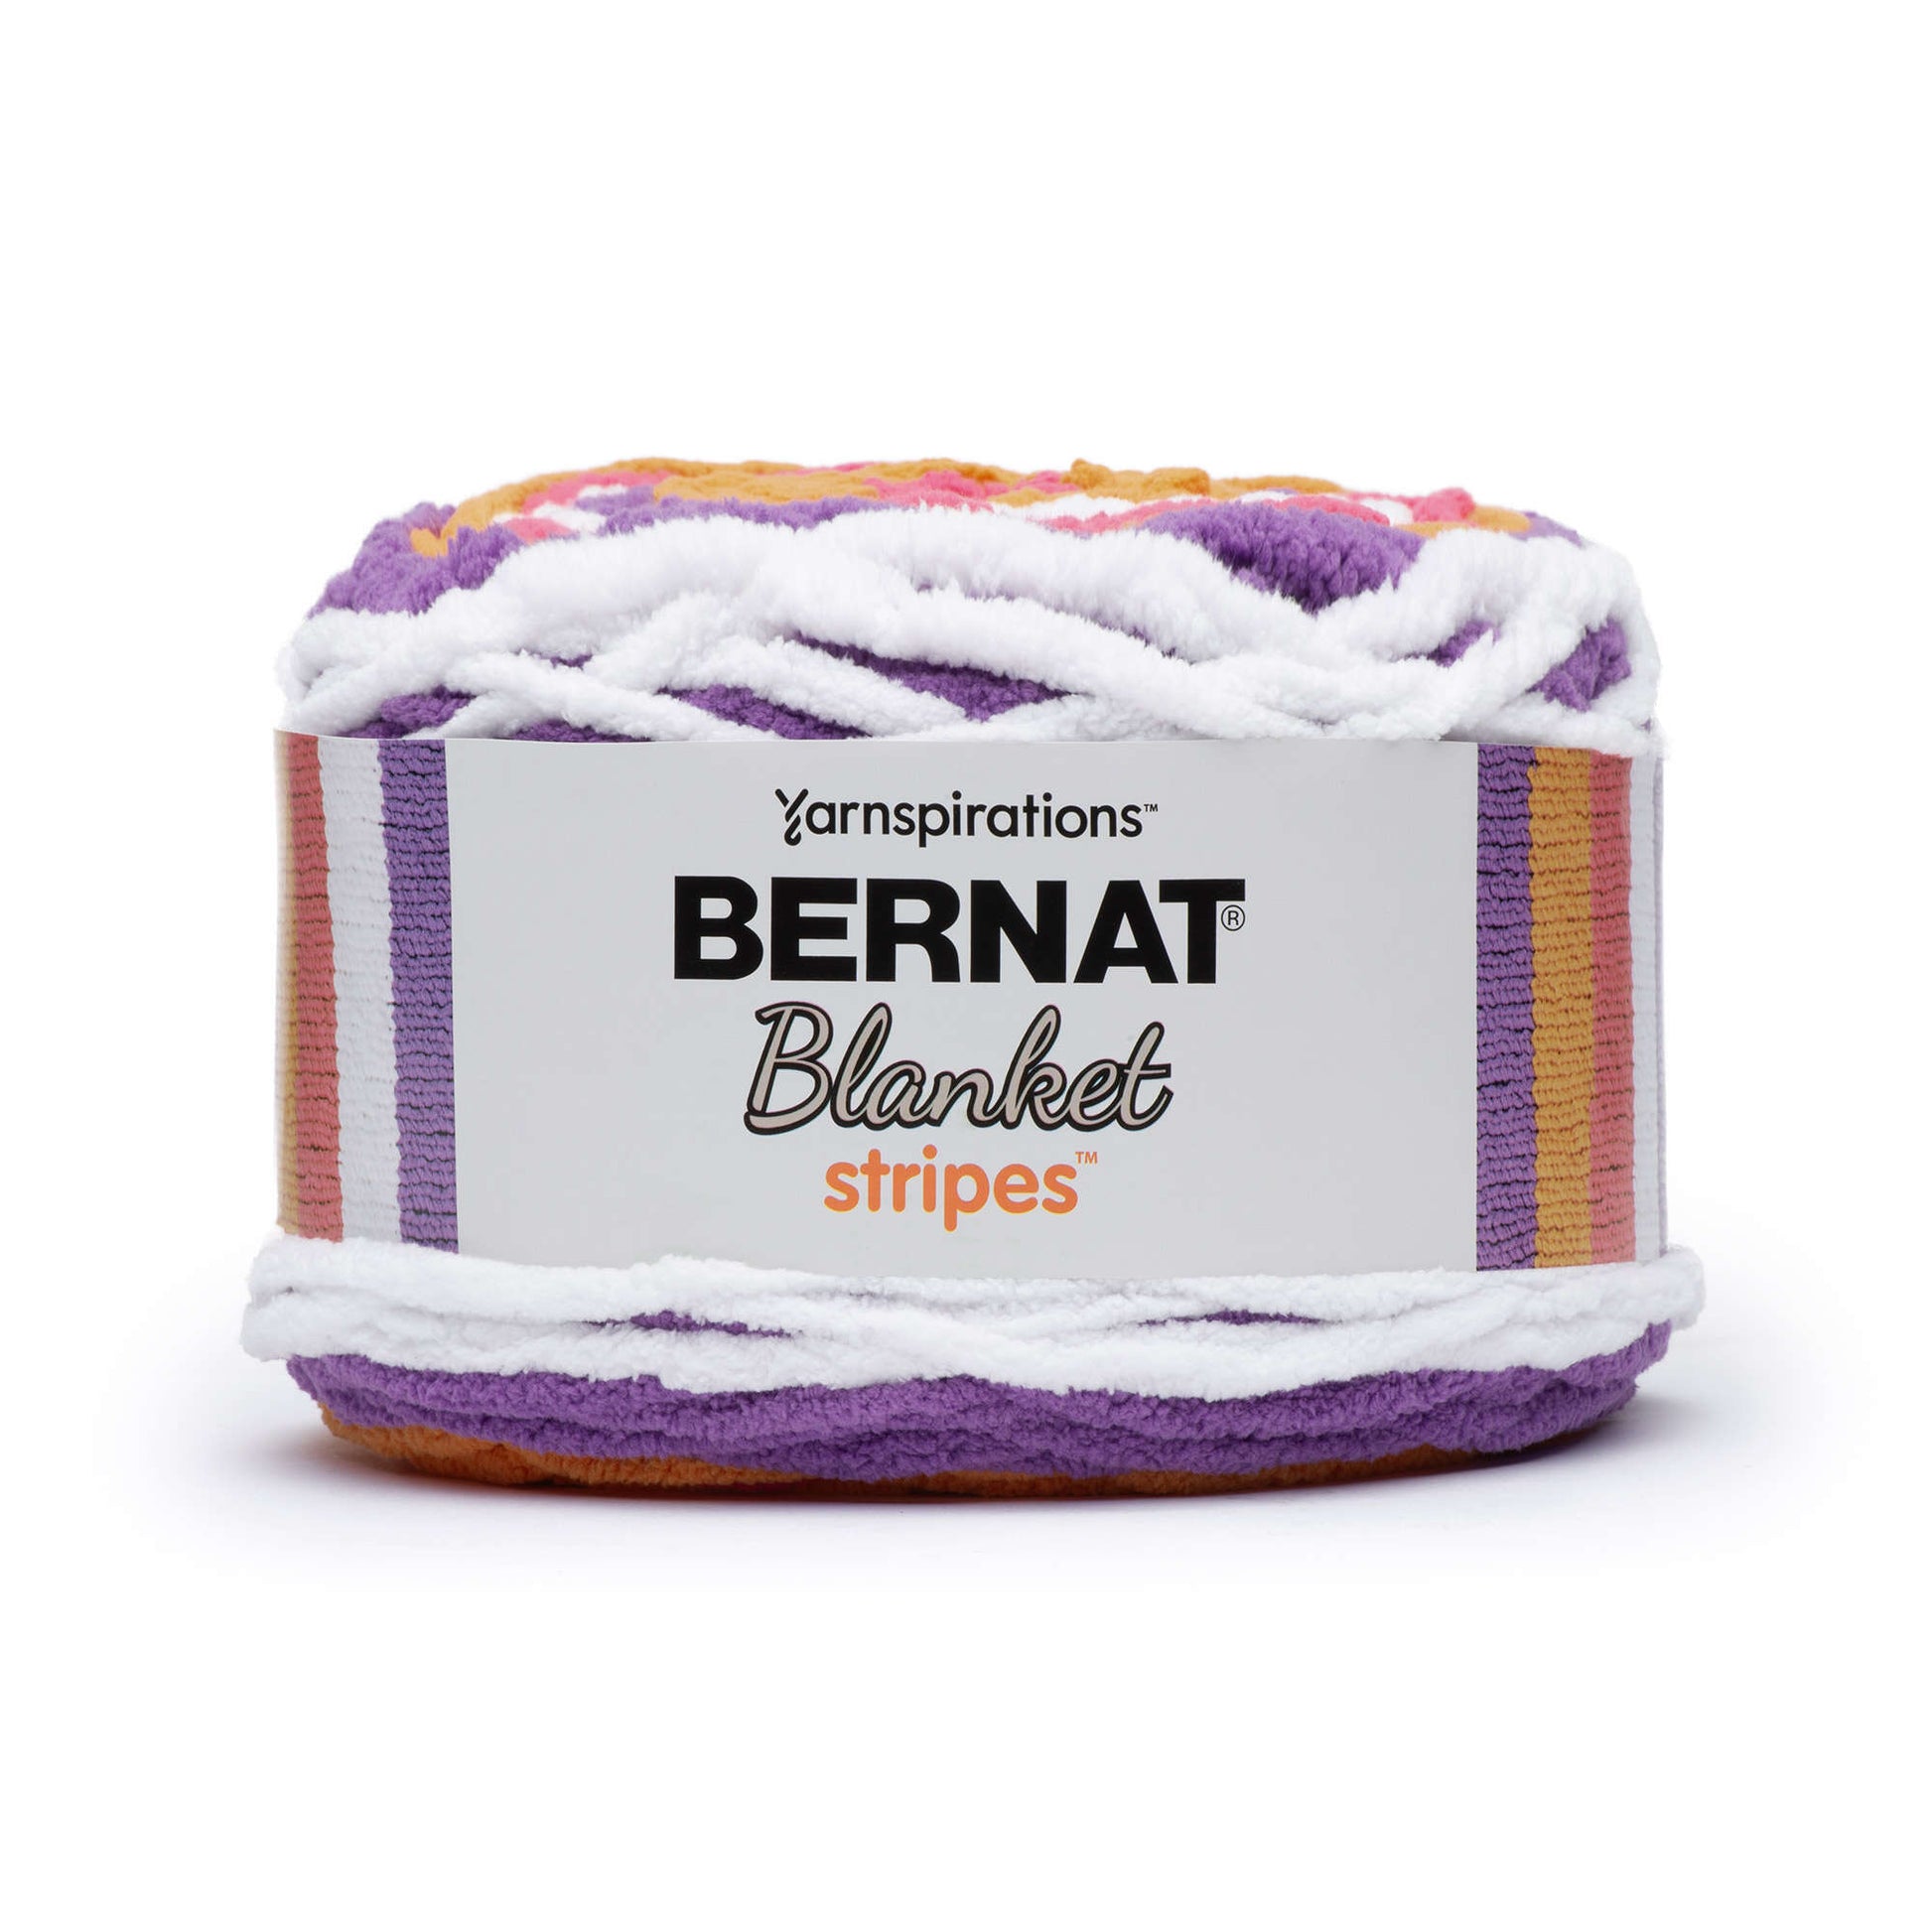 Bernat Blanket Stripes Yarn (300g/10.5oz) - Discontinued Shades Popsicle